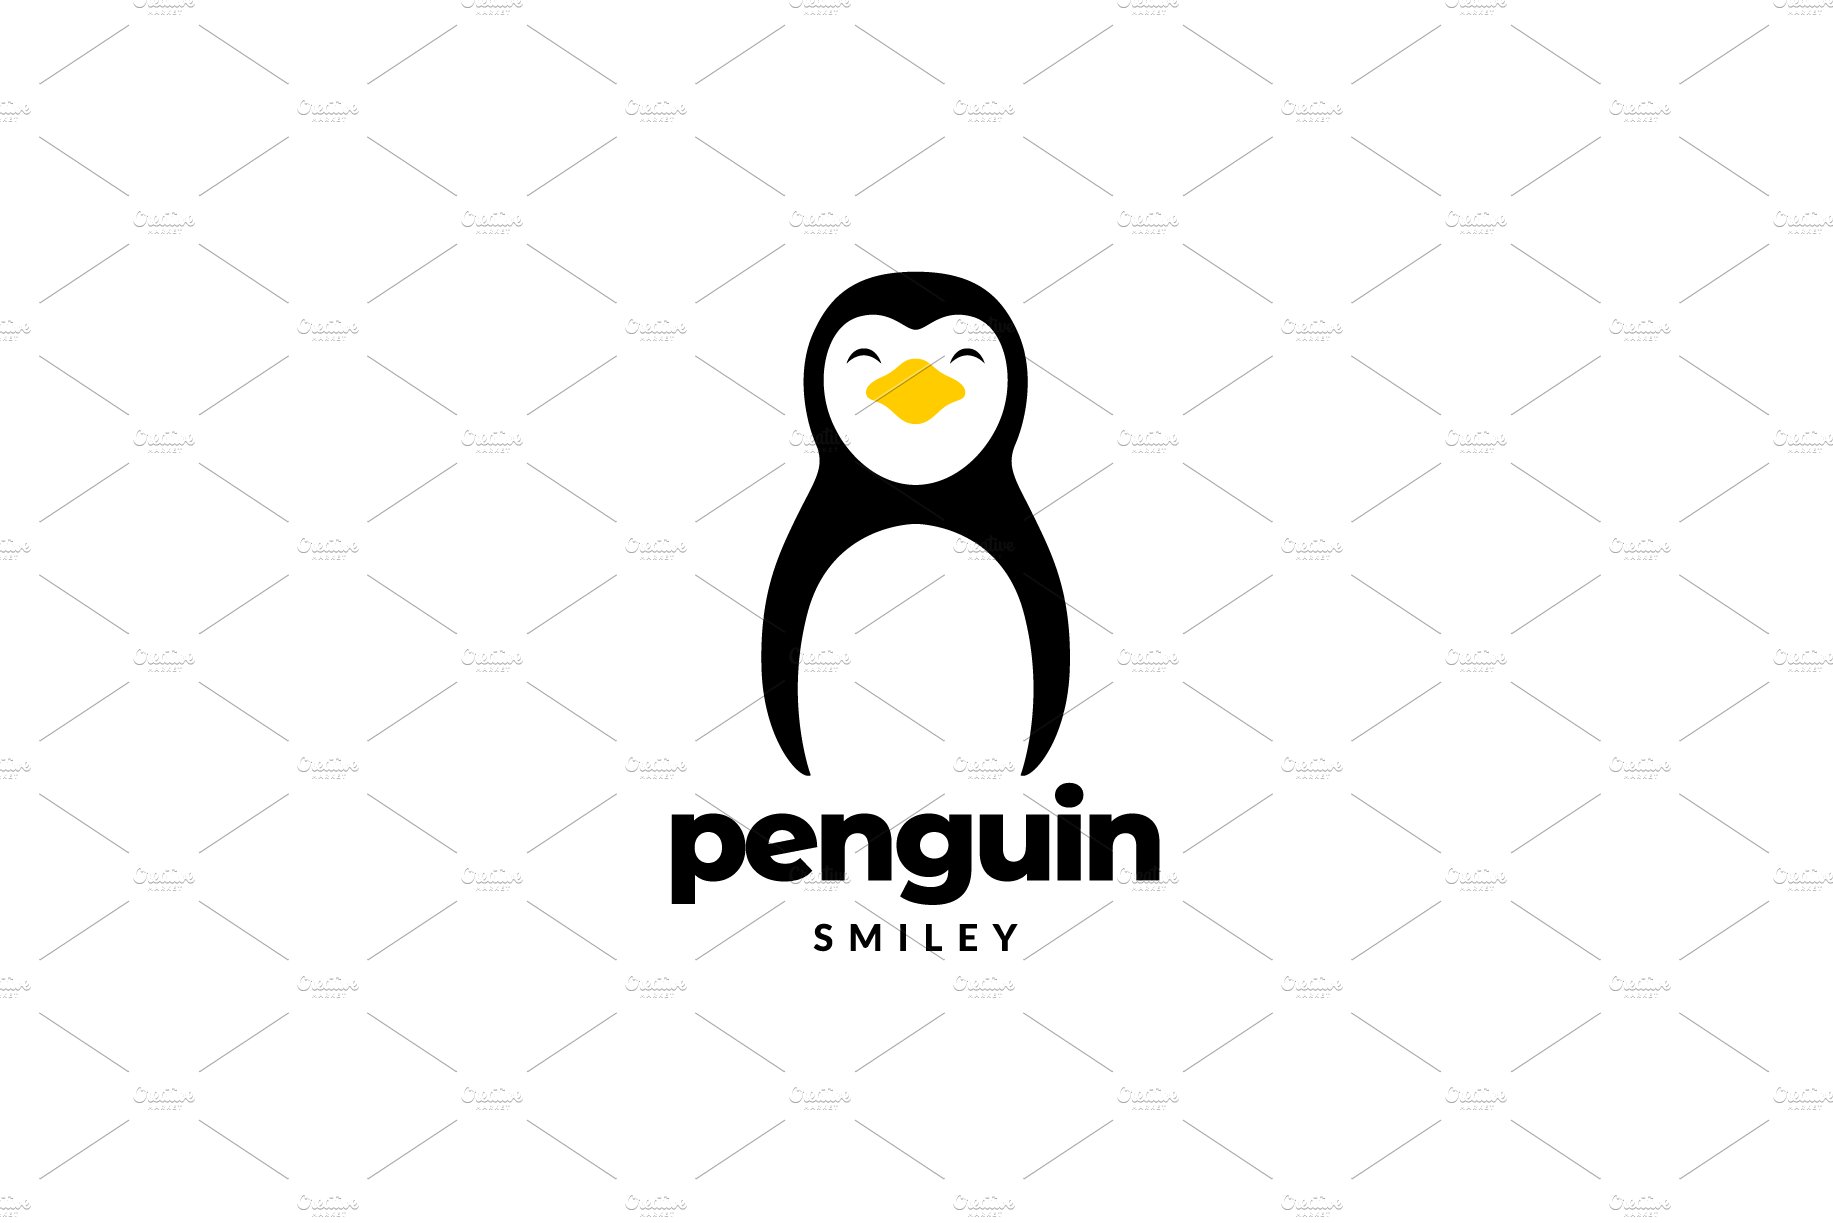 little penguin smile cute logo cover image.